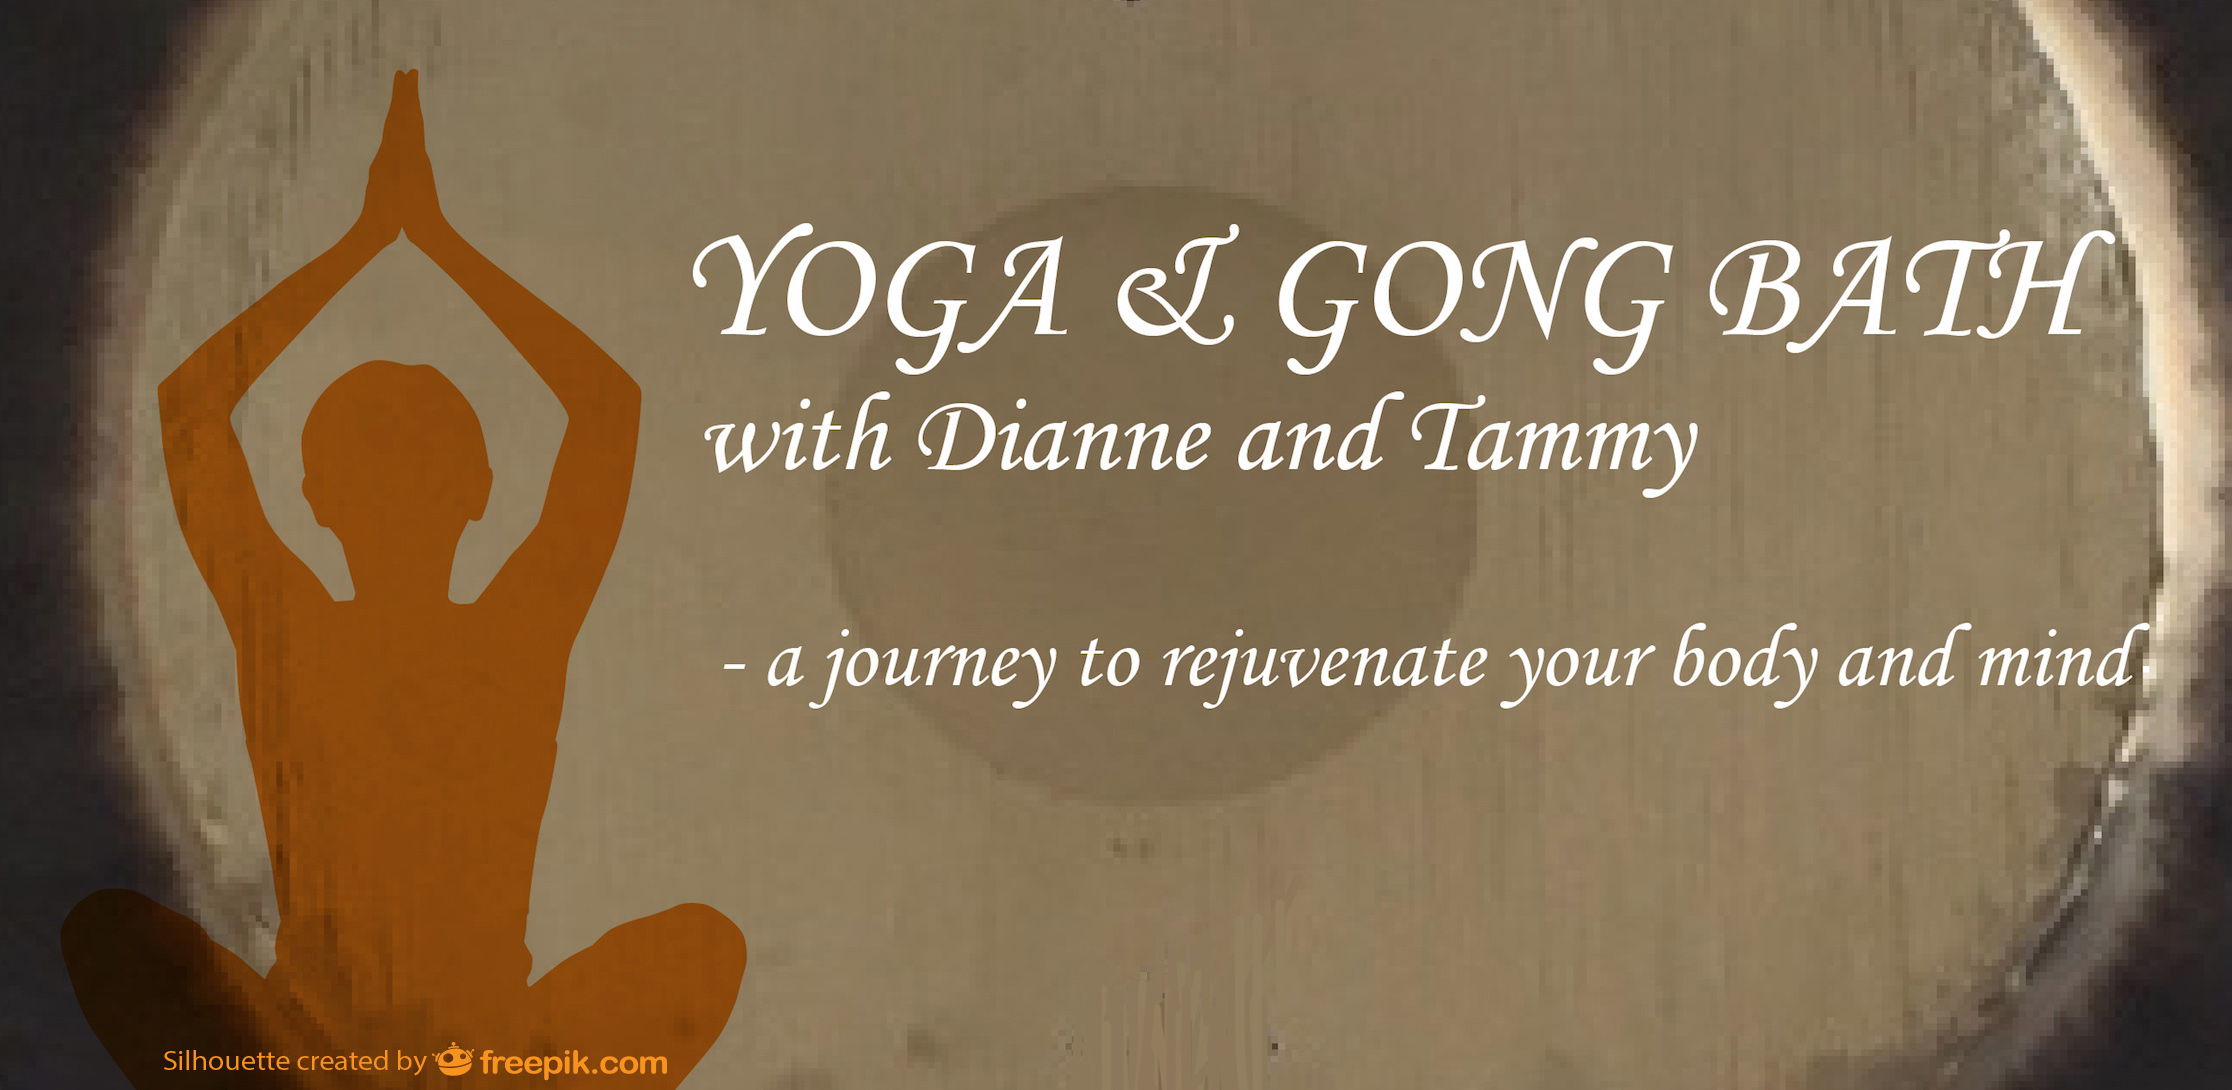 WILTSHIRE - Yoga & Gong retreat